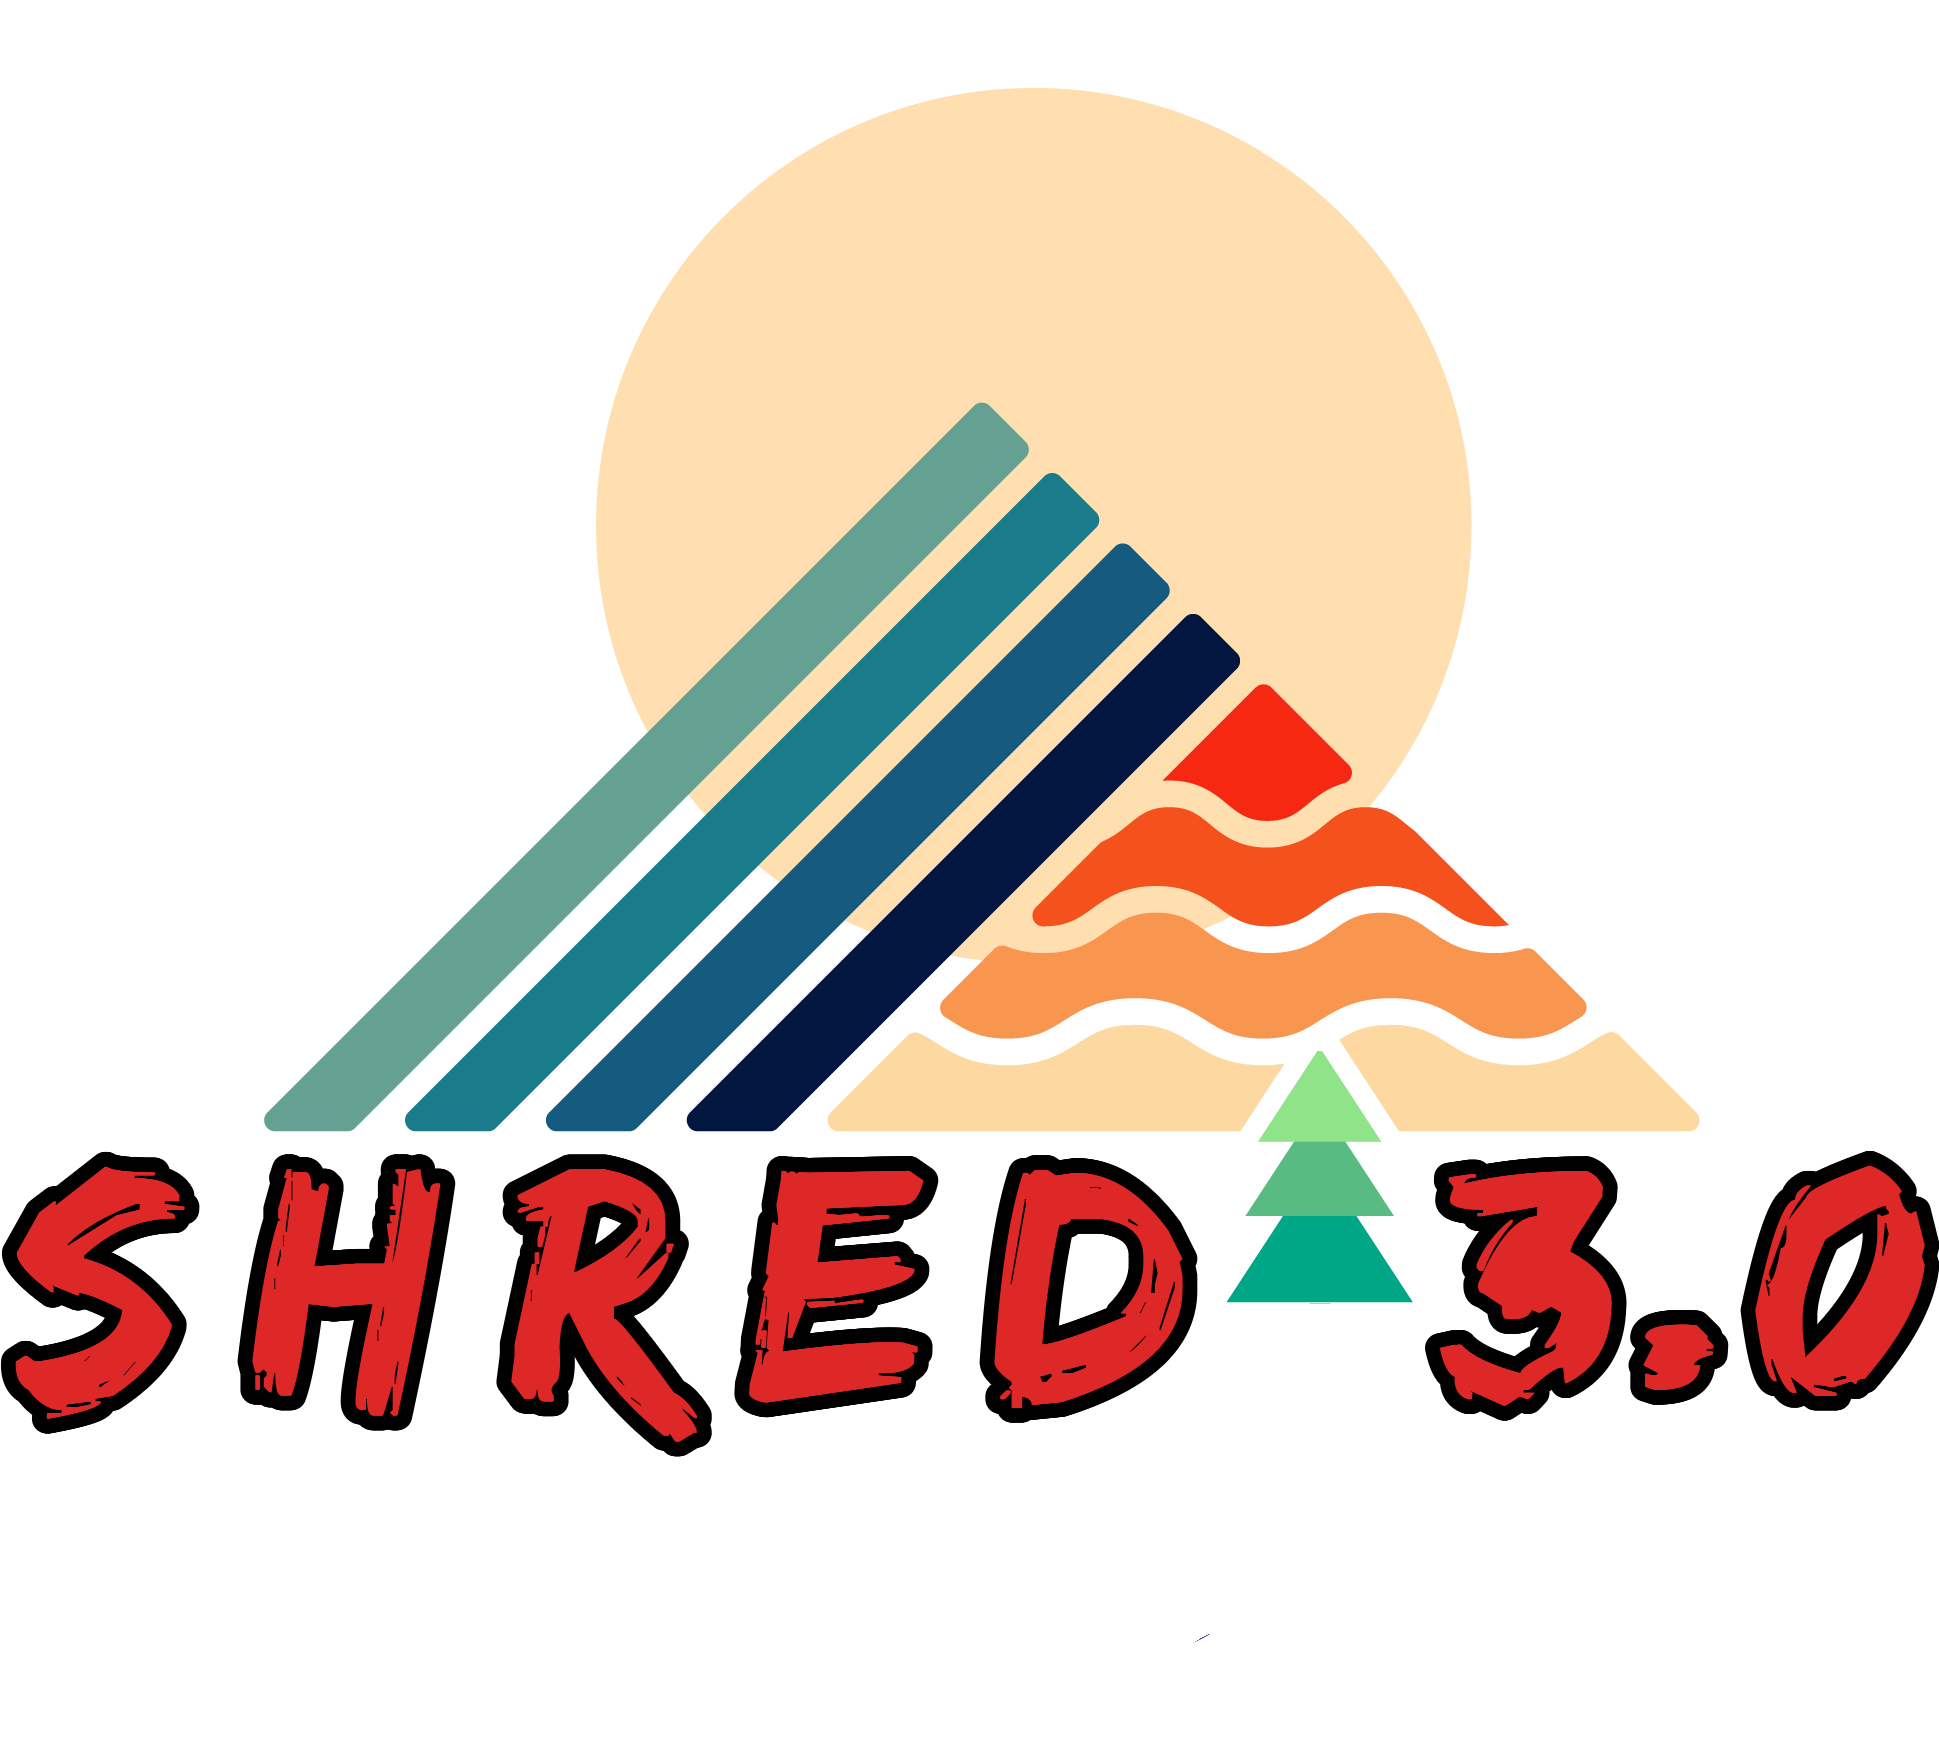 SHRED 3.0 LOGO